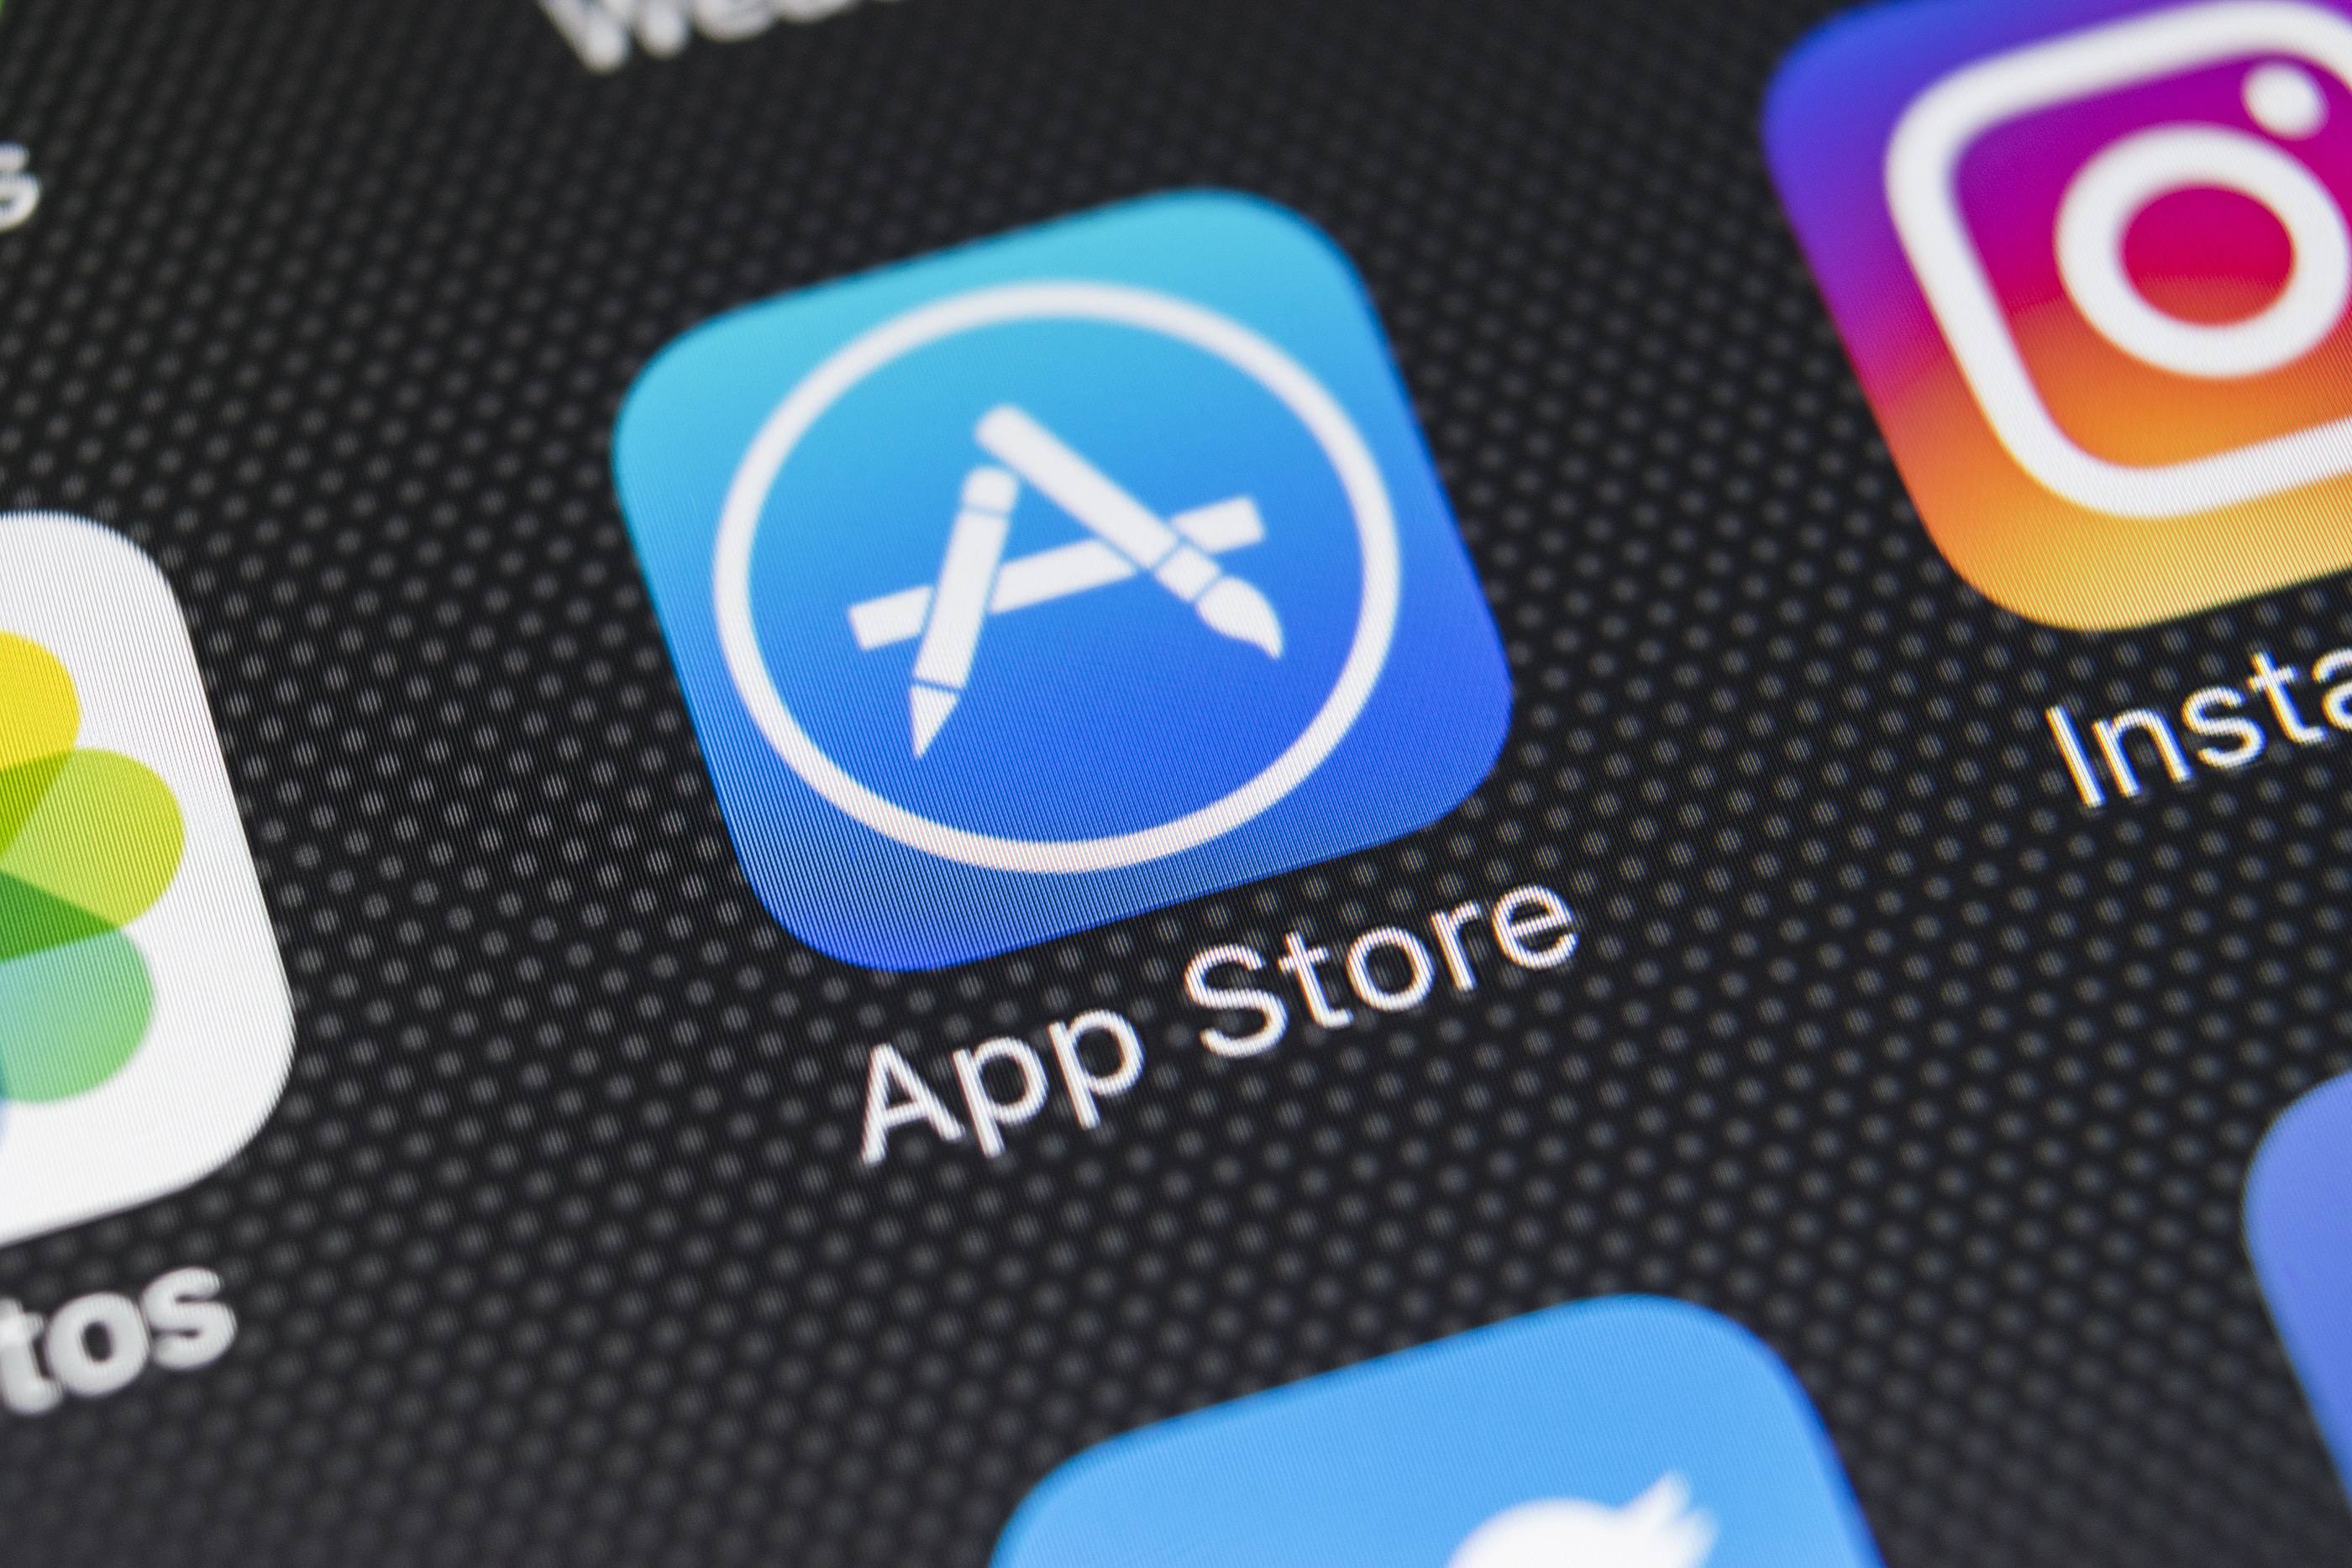 App Store. APPSTORE приложения. APPSTORE иконка. Магазин приложений Apple. Покупки ап стор